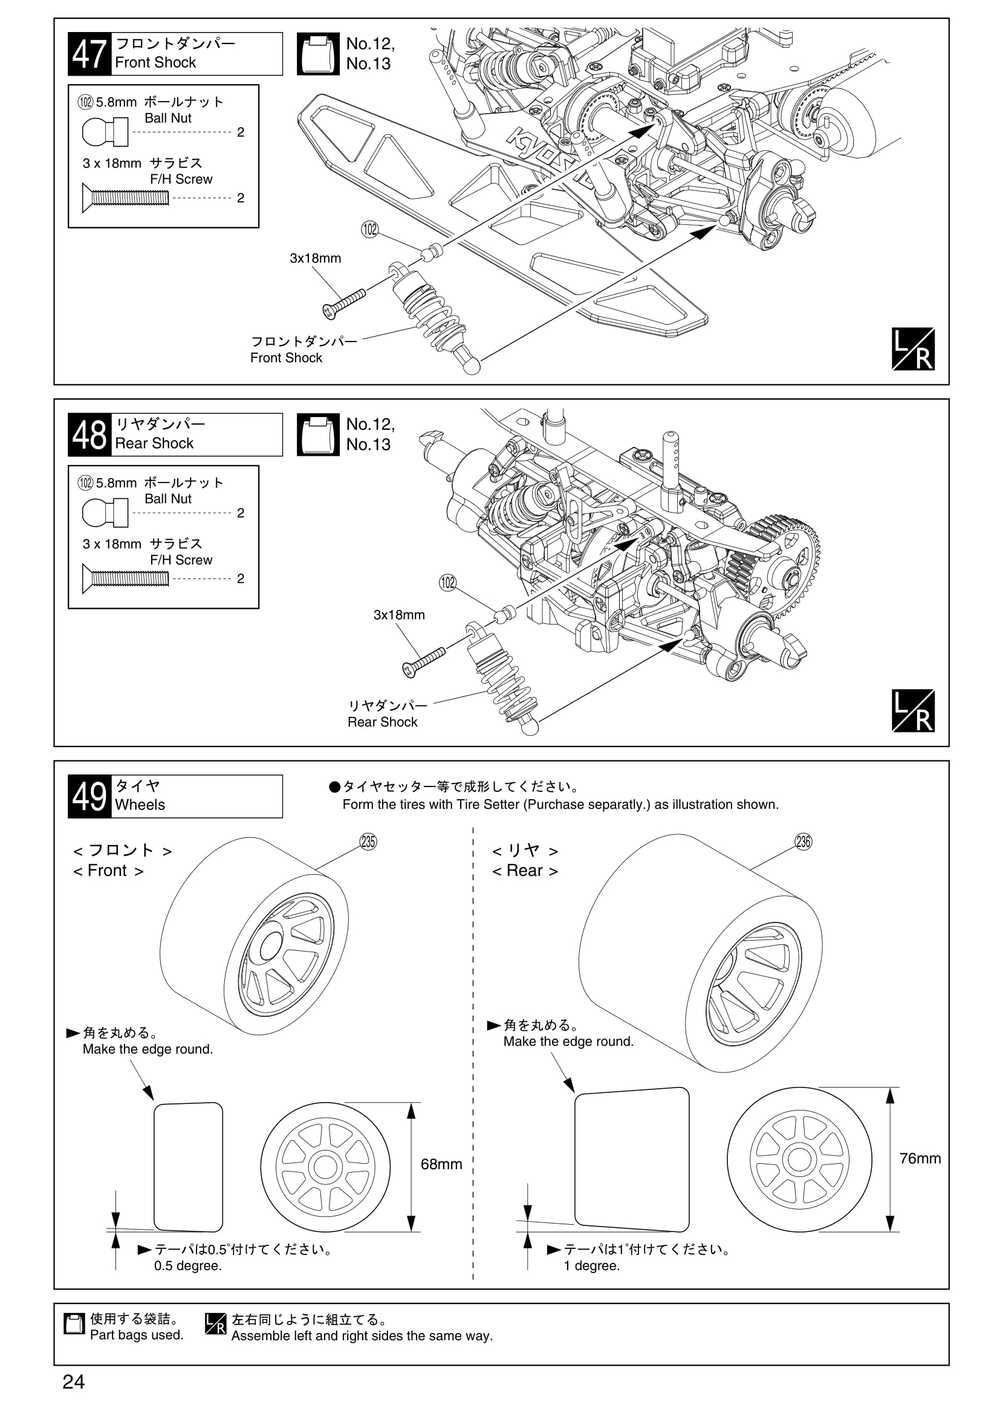 Kyosho - 31041 - Fantom Sports - Manual - Page 24